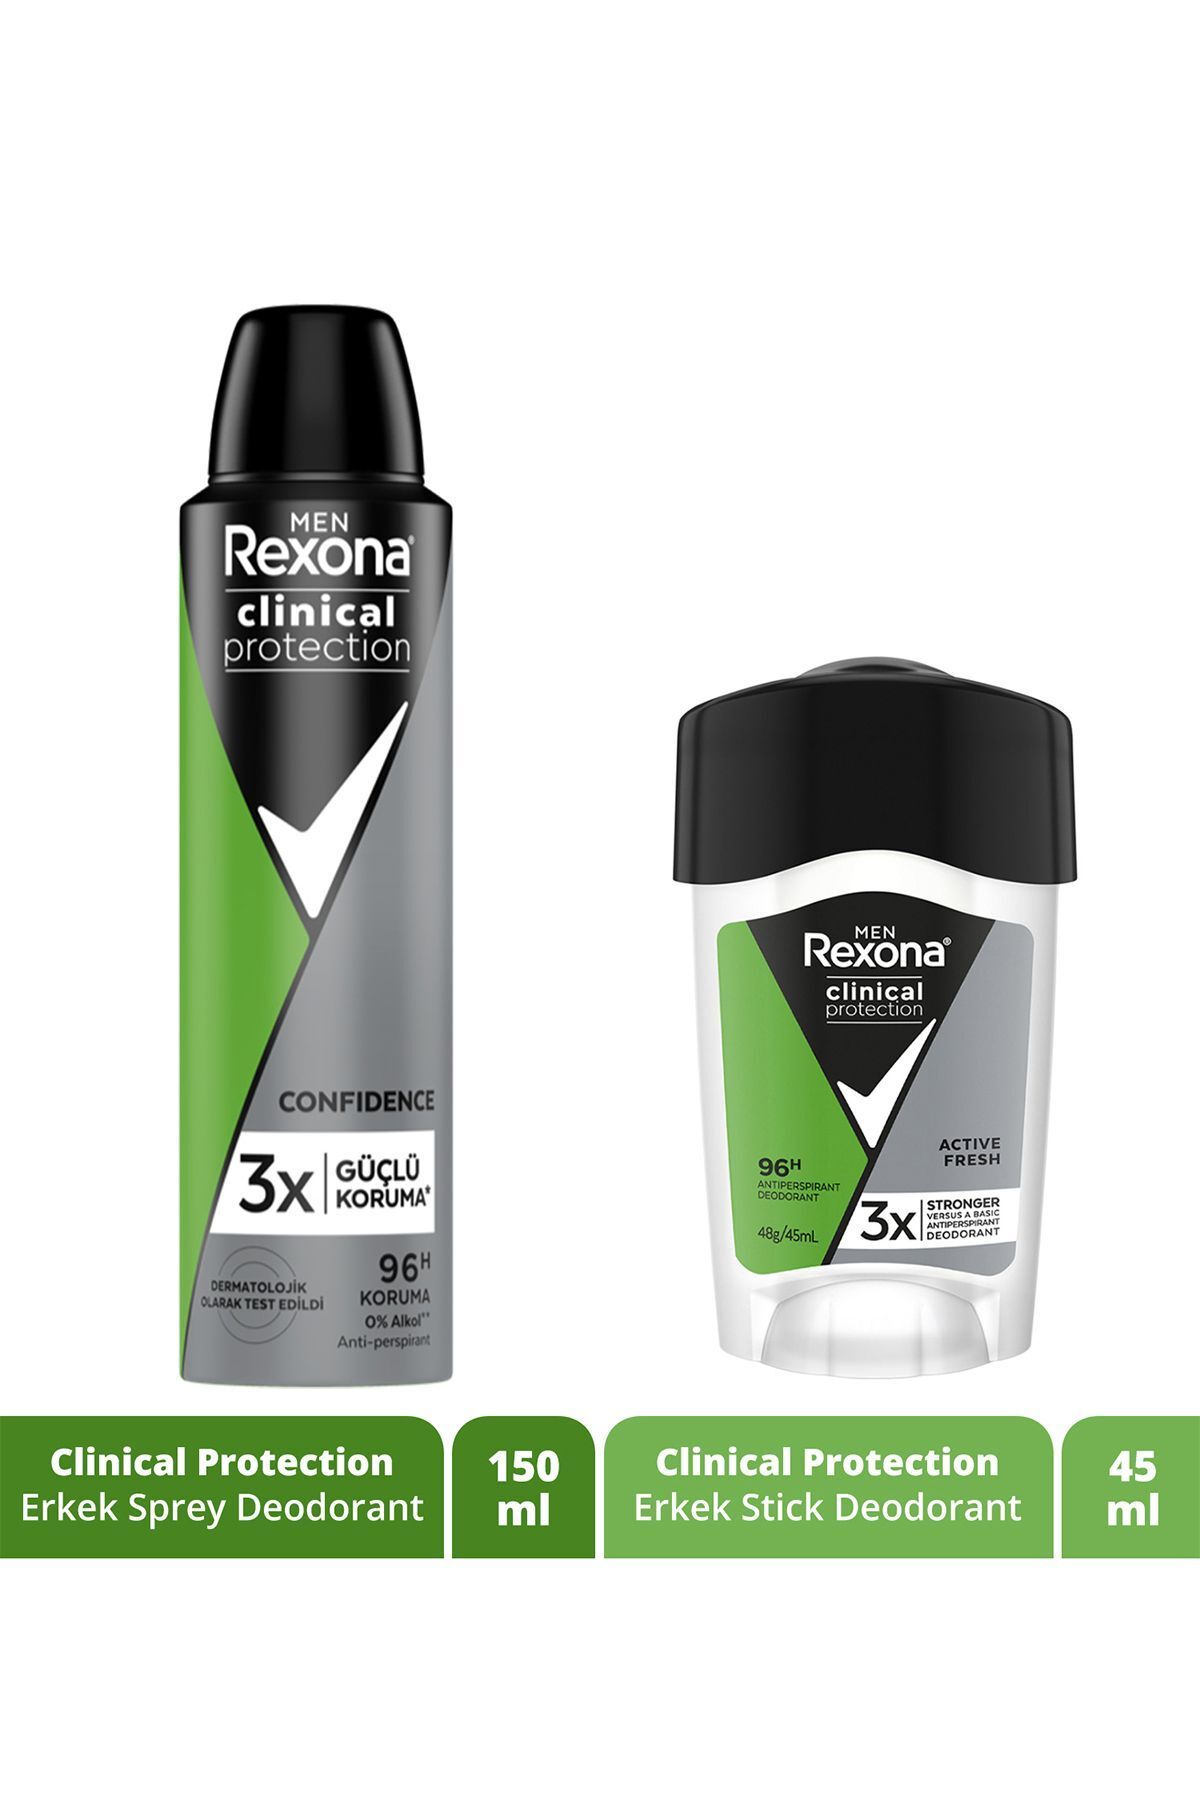 Rexona Men Clinical Protection Erkek Sprey Deodorant 150 ml Erkek Stick Deodorant 45 ml